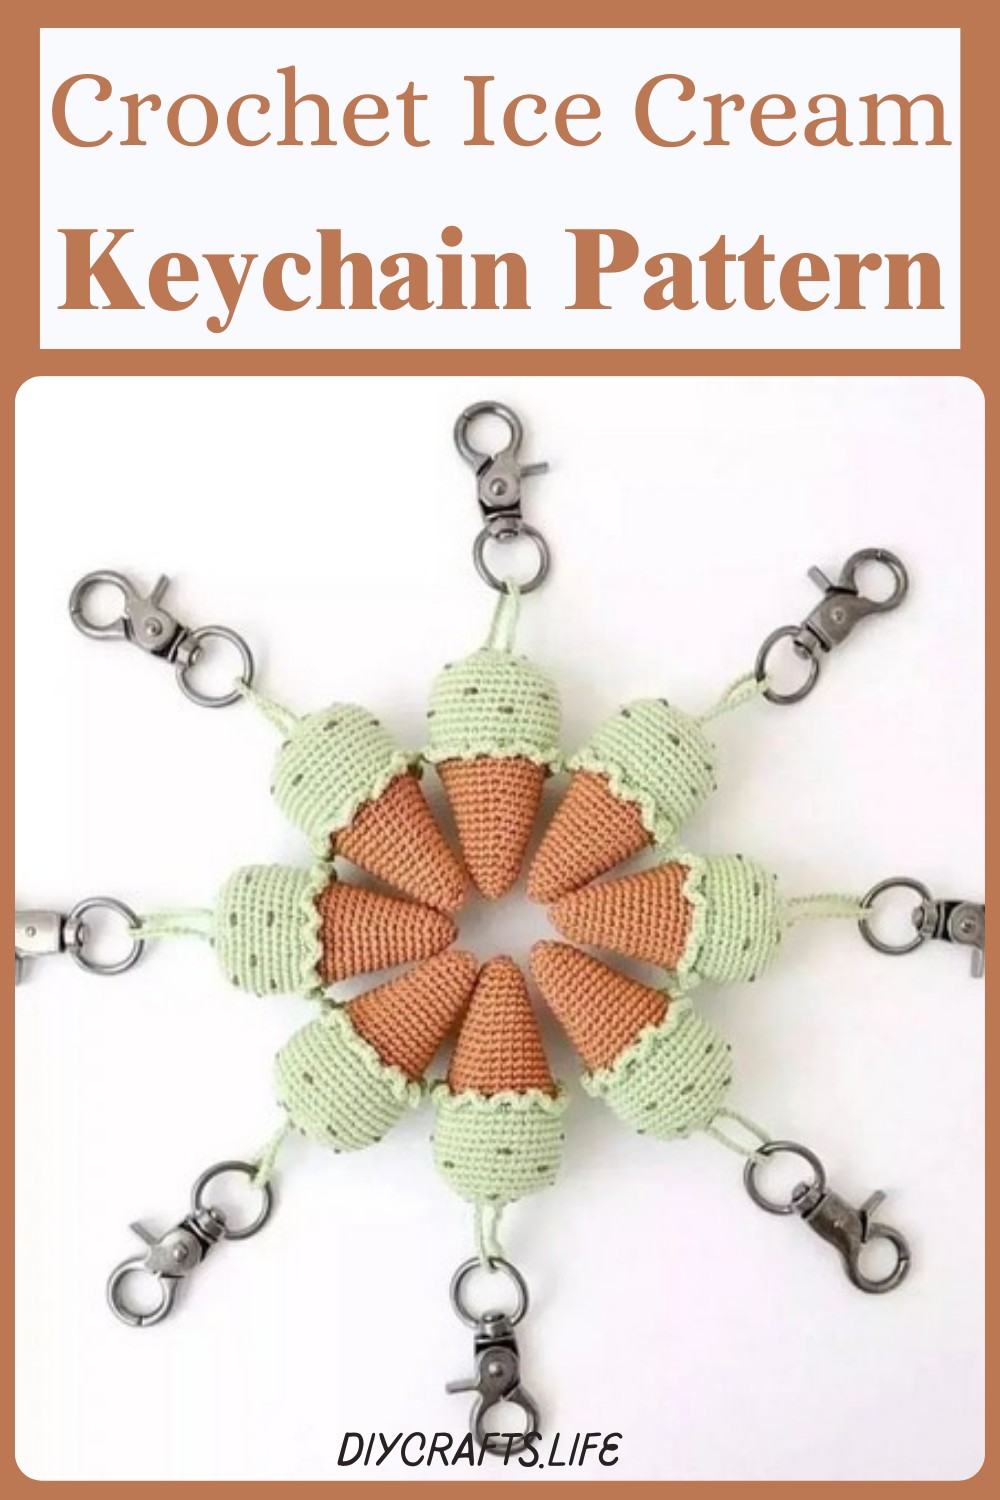 Crochet Ice Cream Keychain Pattern